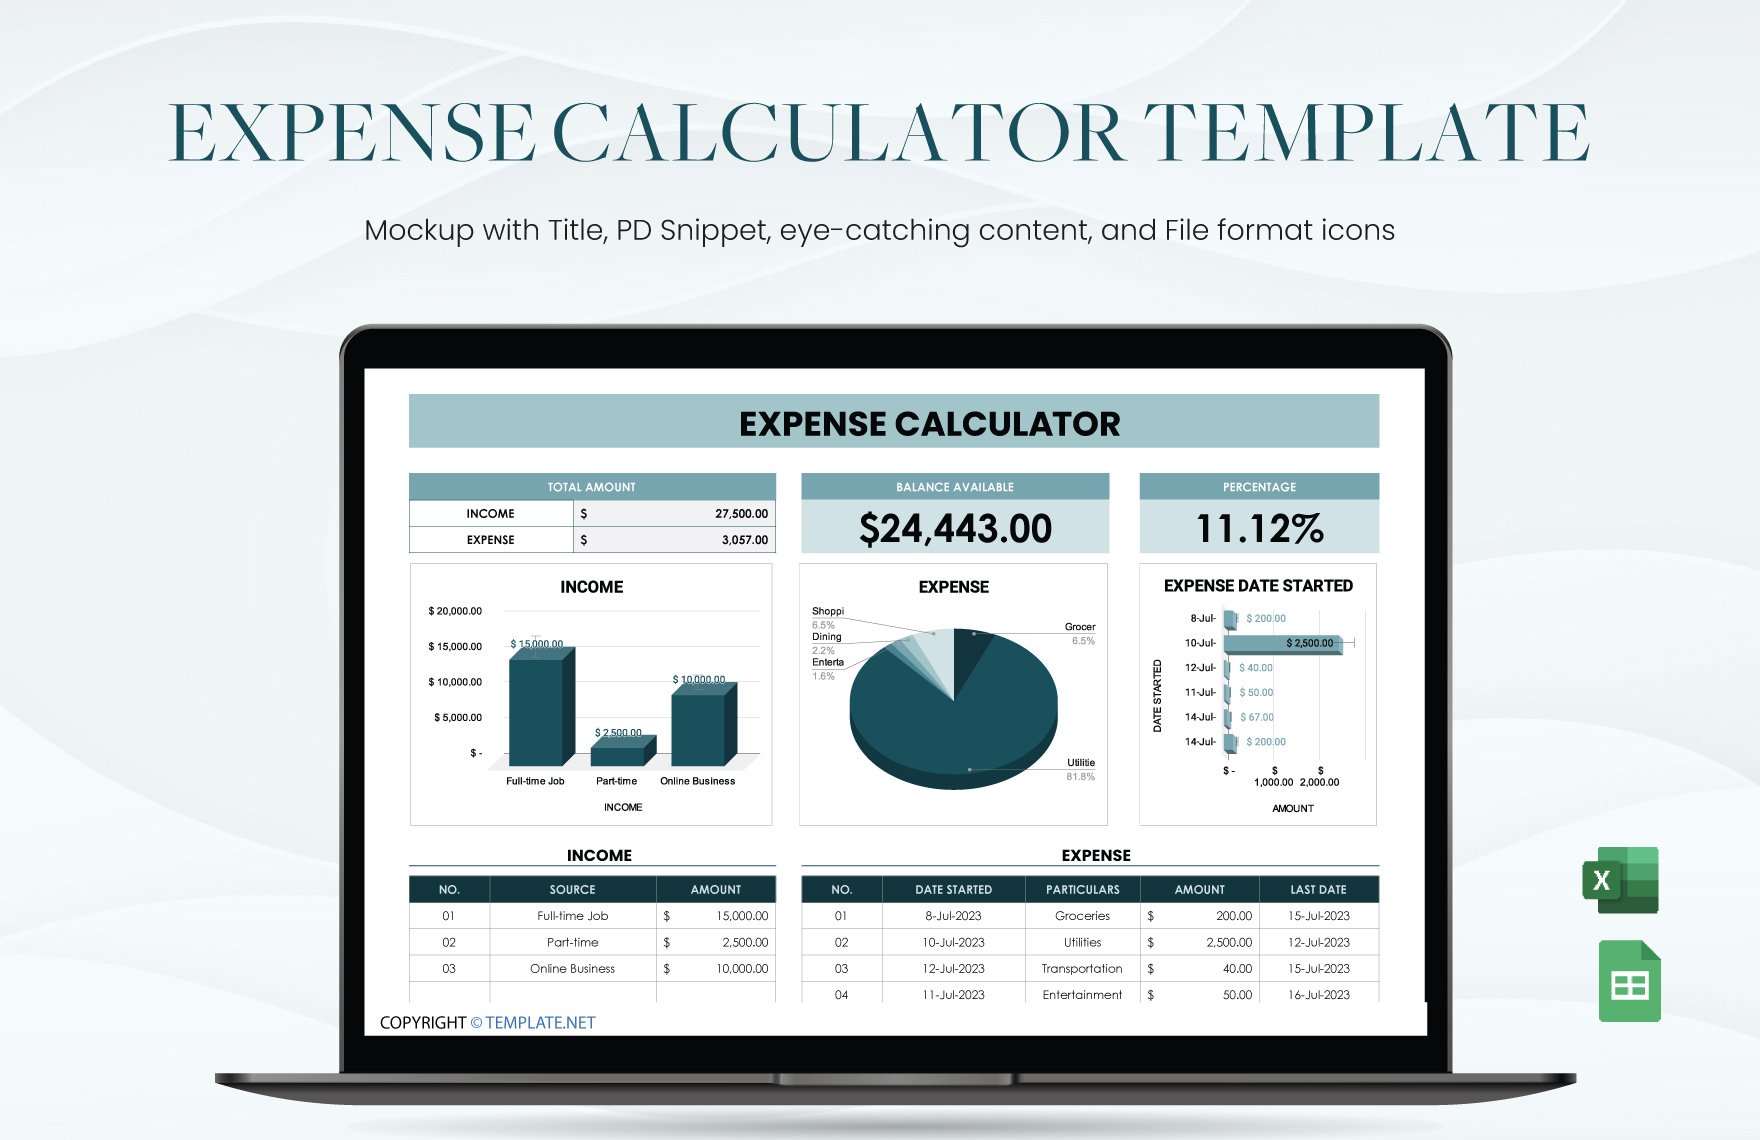 Expenses Calculator Template